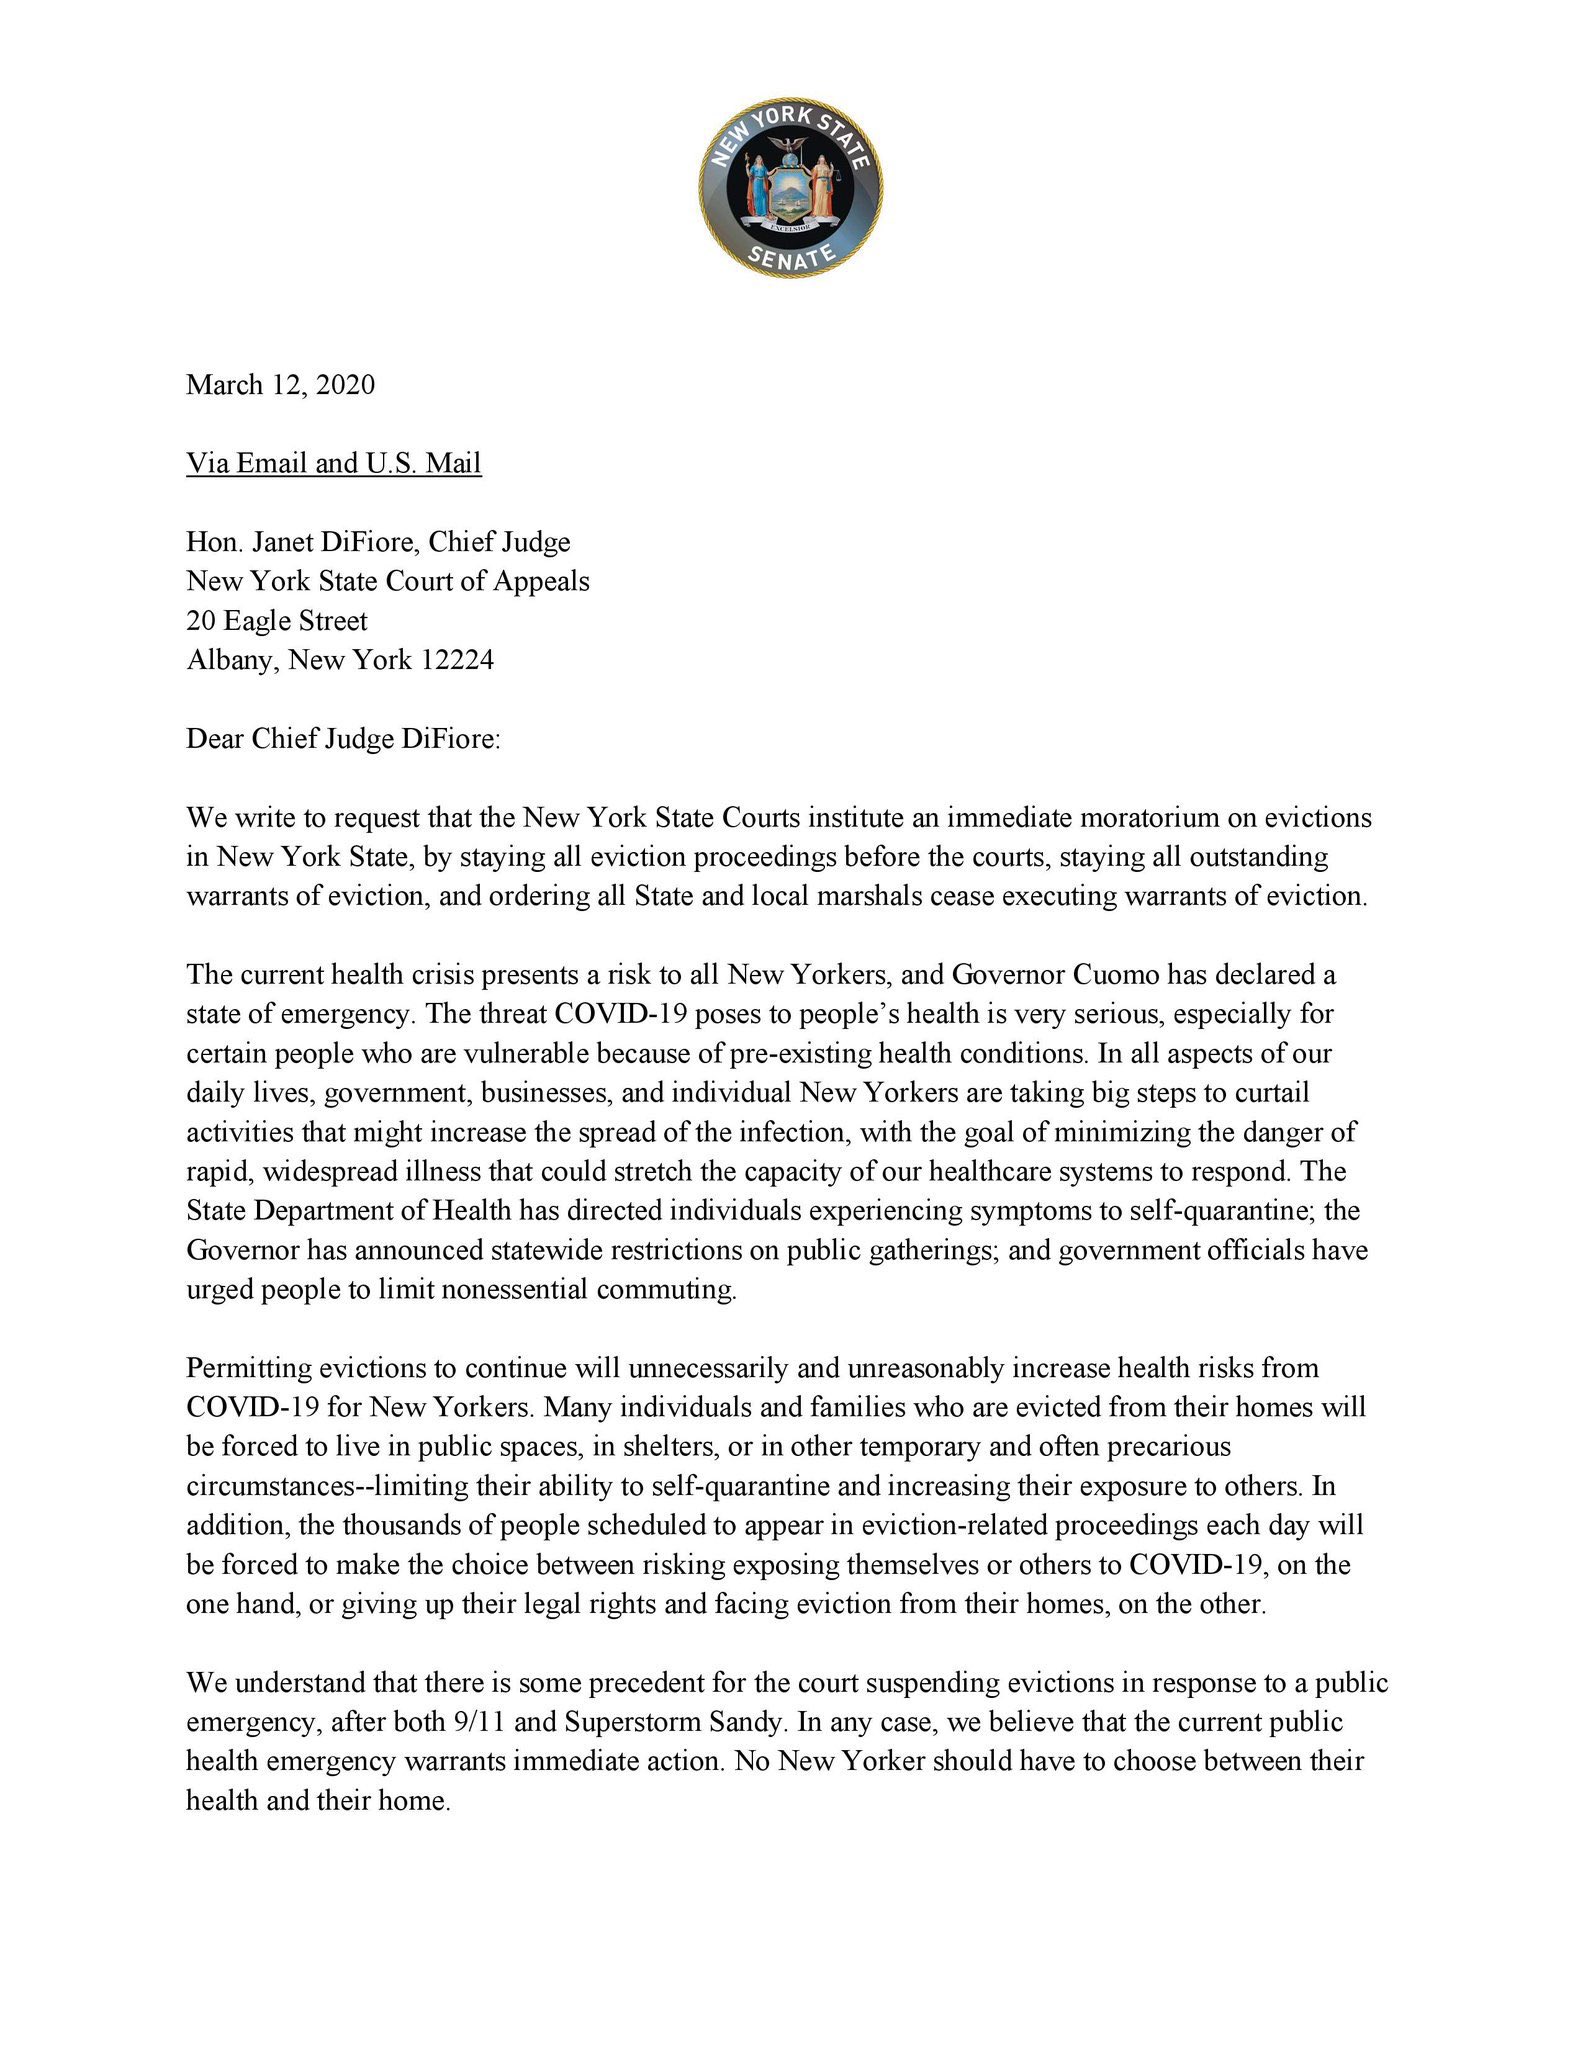 State Senator Julia Salazar on Twitter: "We just sent this letter